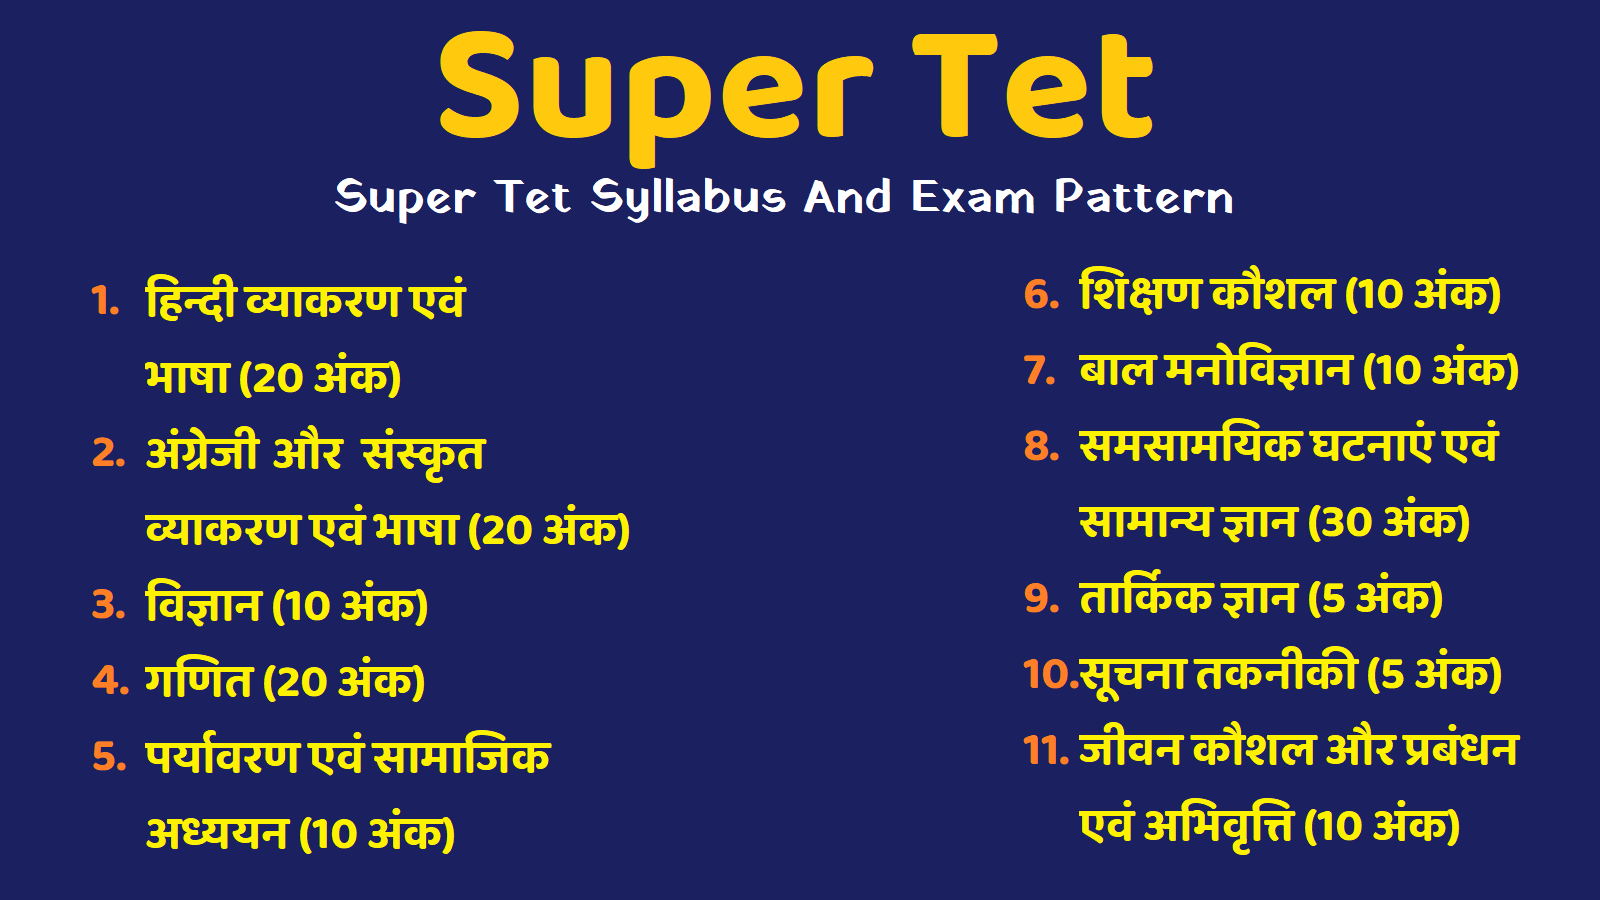 Super Tet Syllabus And Exam Pattern